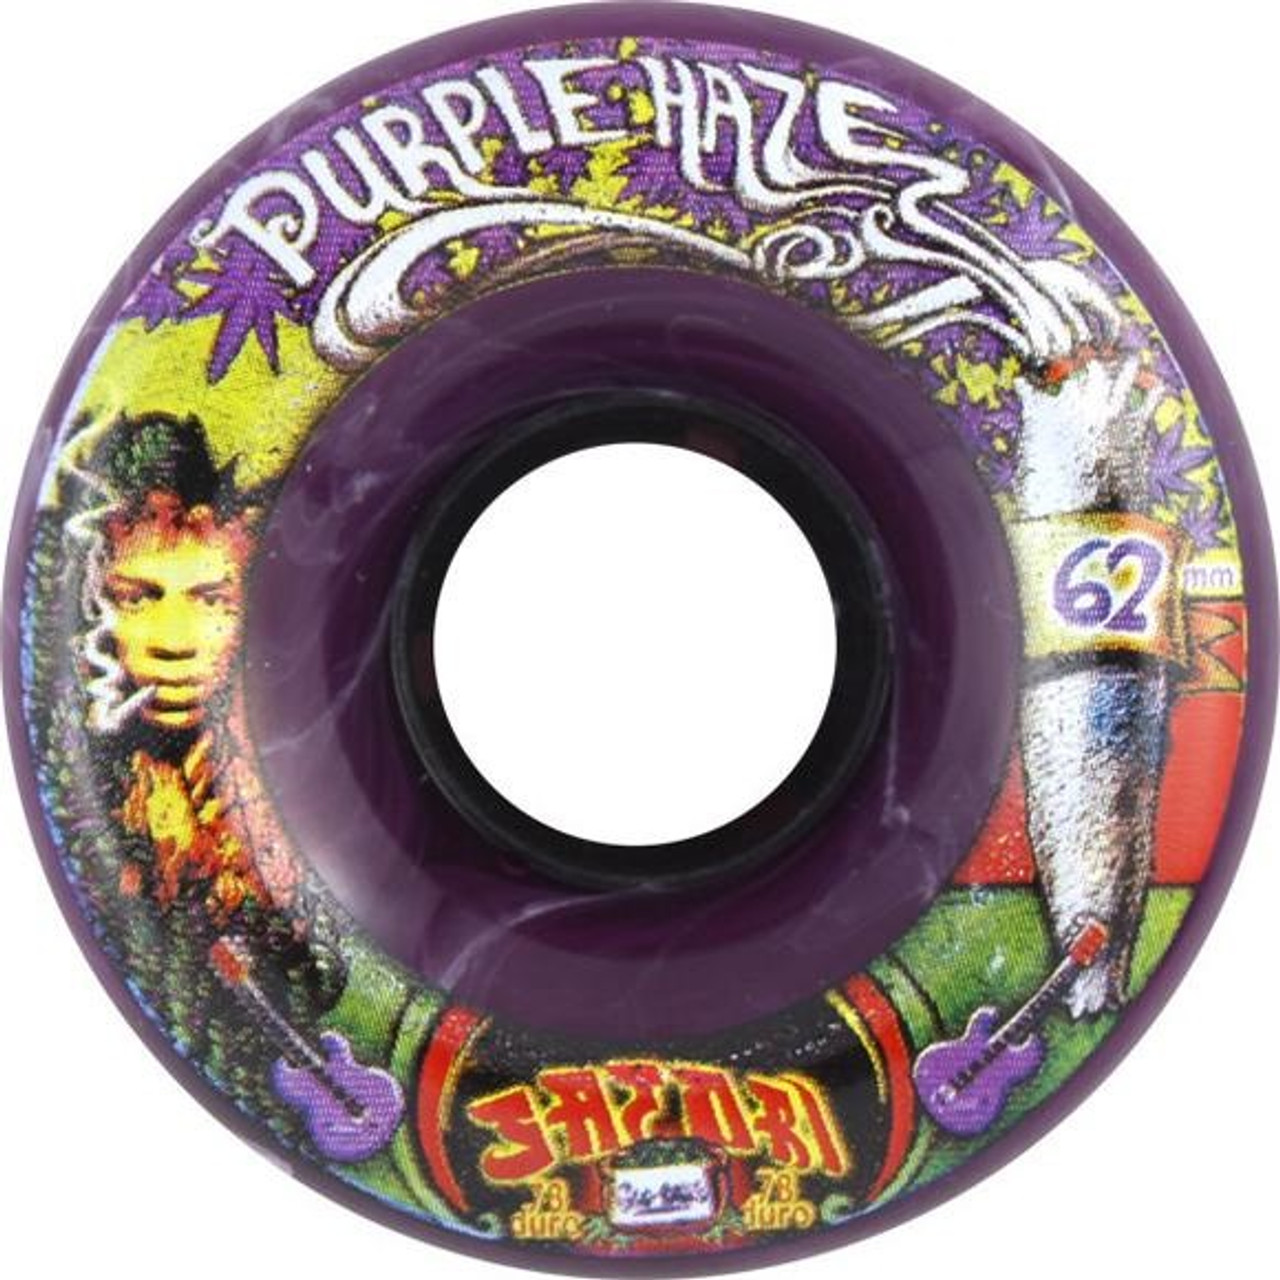 Satori Goo Ball Purple Haze Wheels Set Purple 62mm/78a